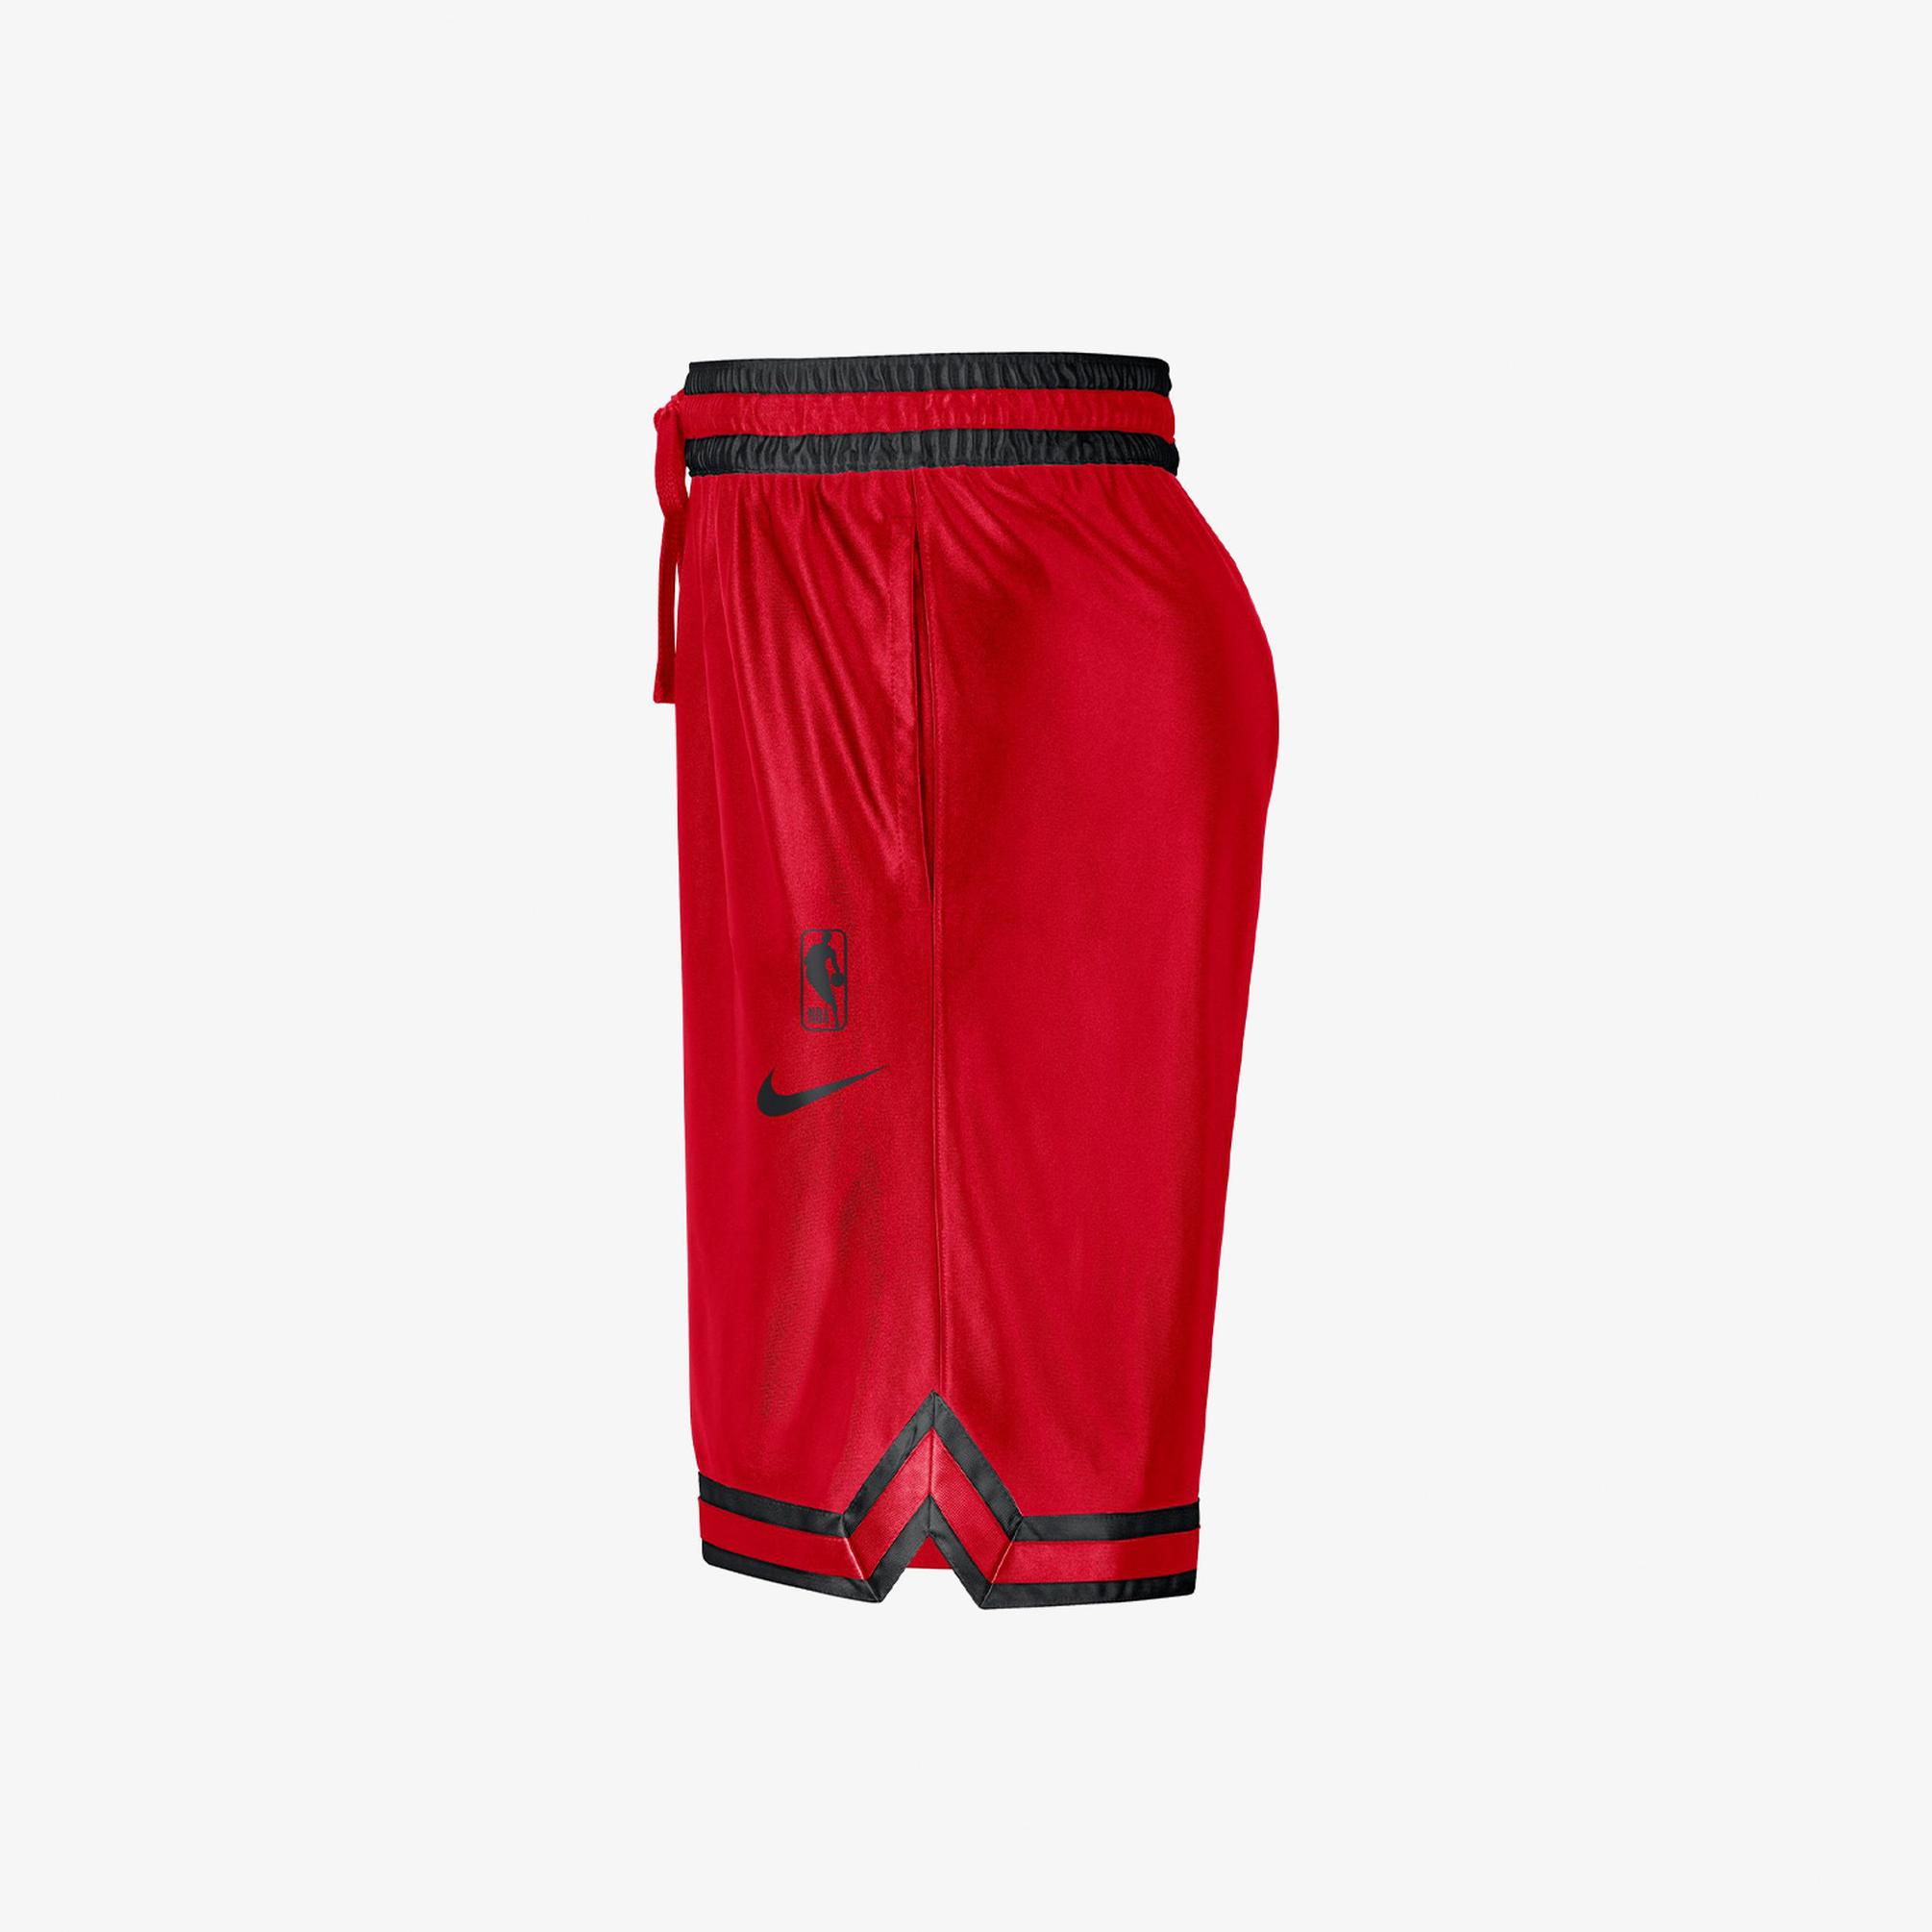  Nike Chicago Bulls Erkek Kırmızı/Pembe Şort